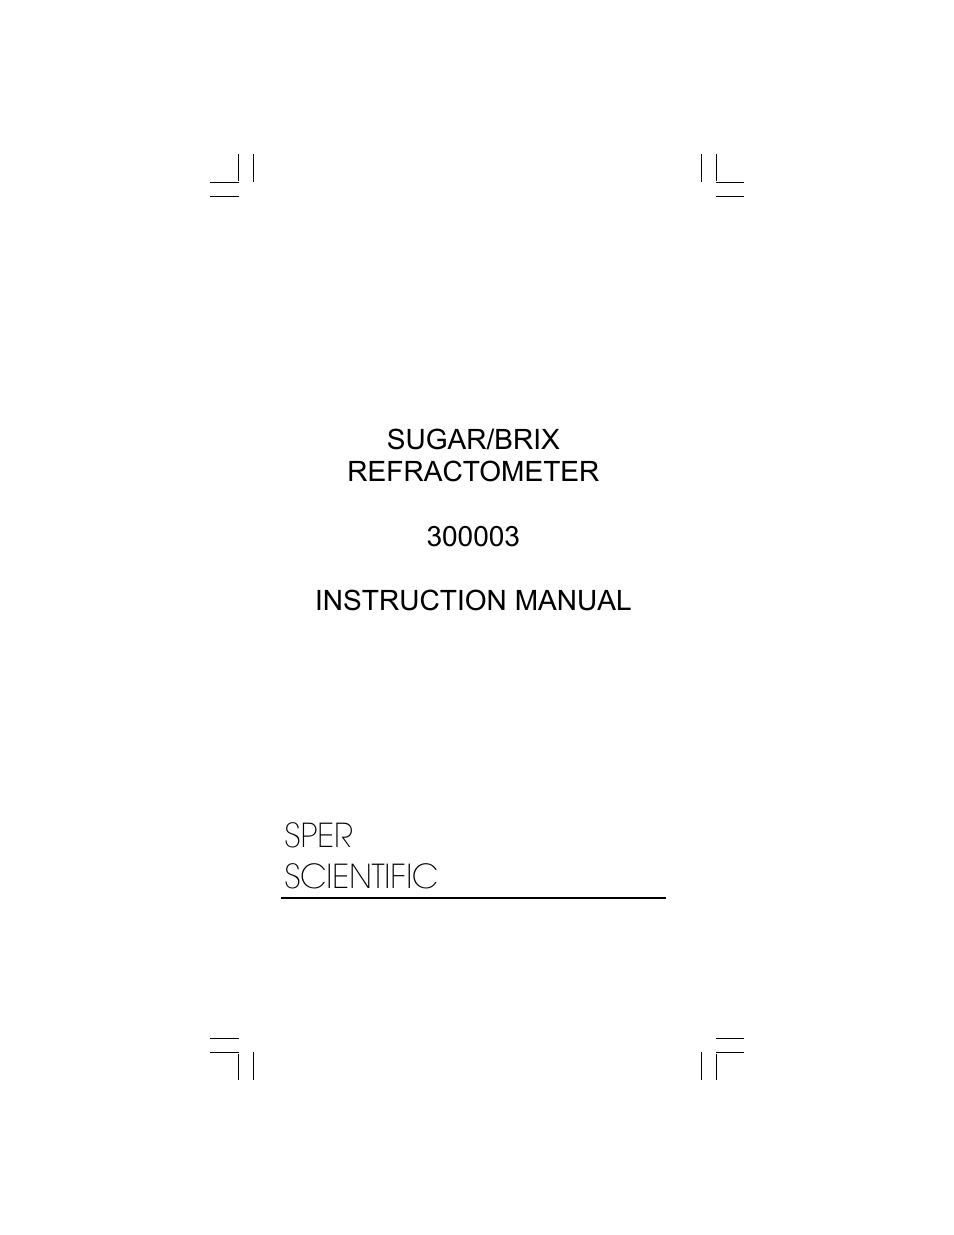 300003 Refractometer - Sugar Brix 0-80%